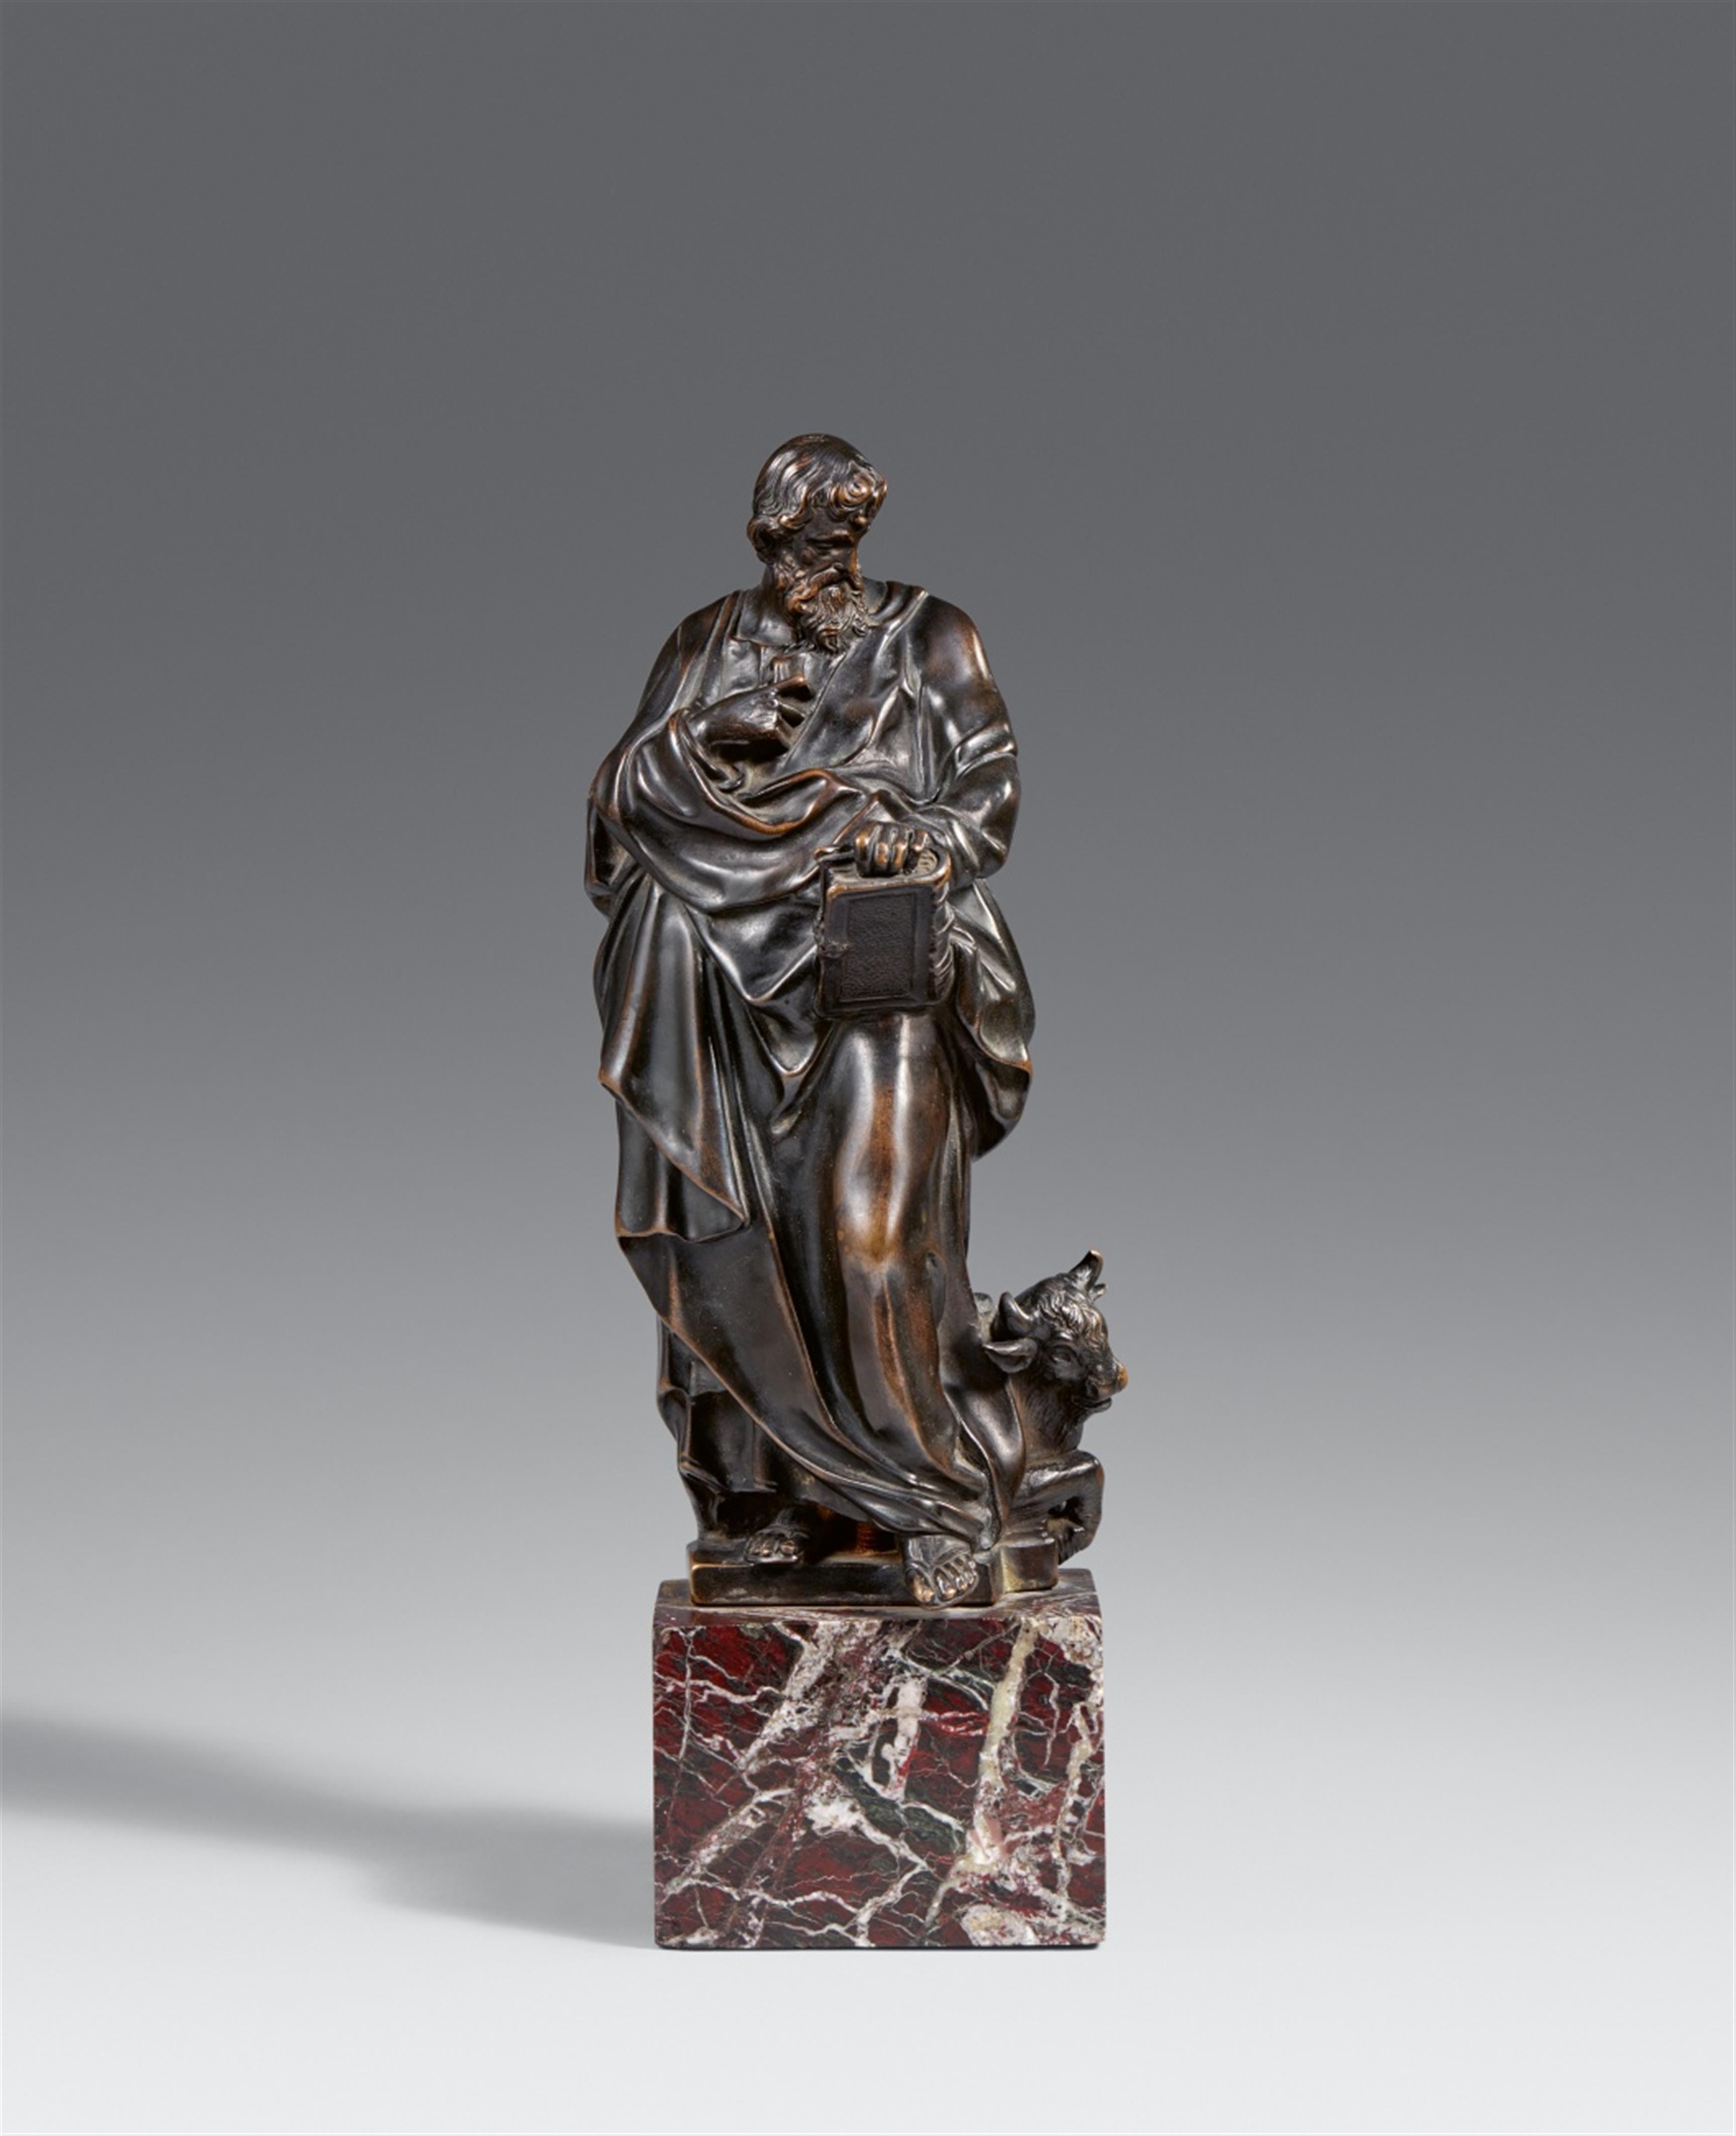 Jacob Cornelisz Cobaert workshop or follower - A cast bronze figure of Saint Luke